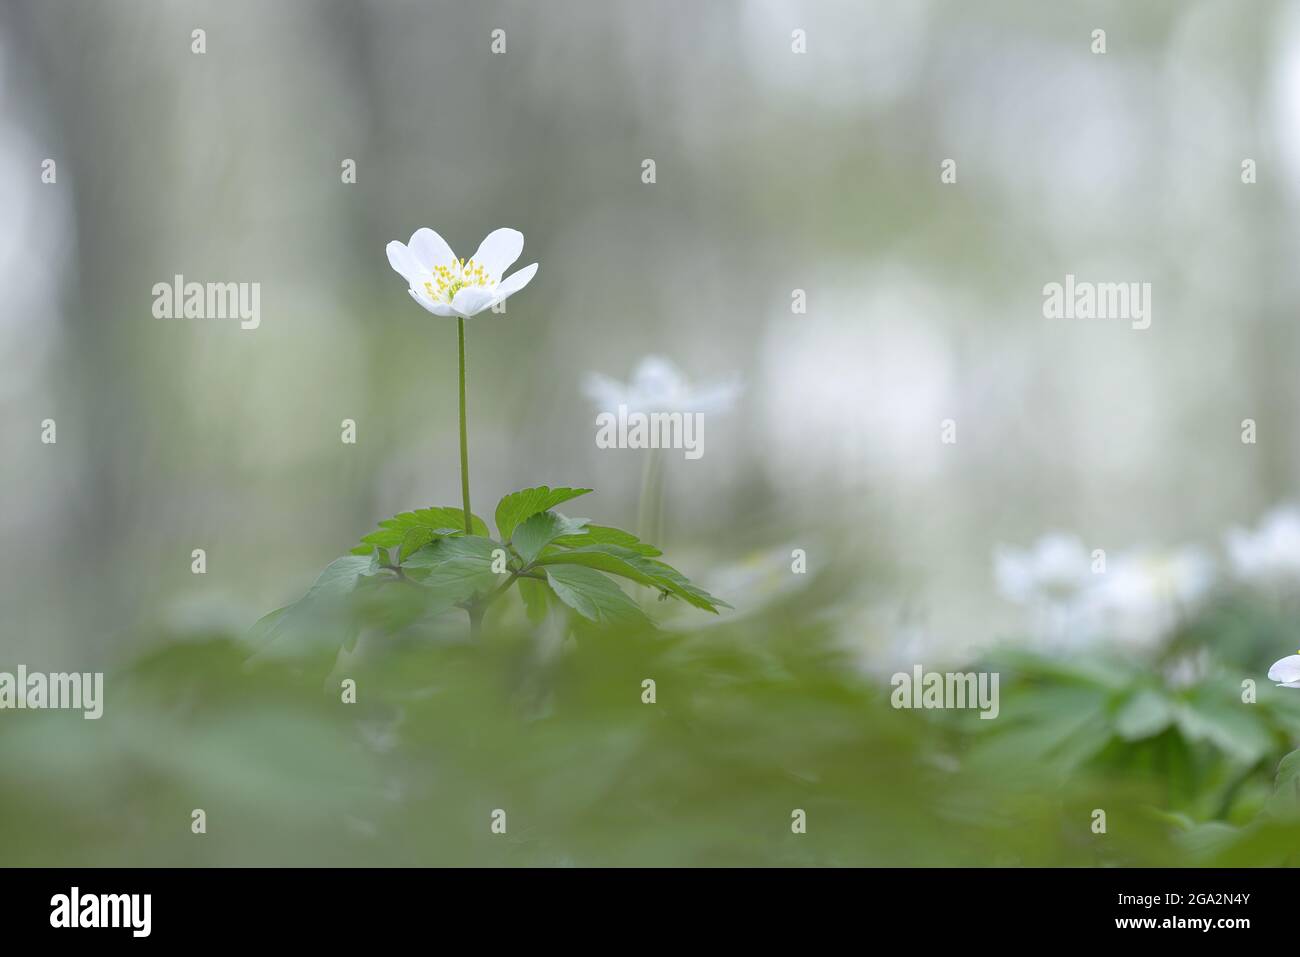 Wood anemone (Anemone nemorosa), a delicate white flowering plant; Bavaria, Germany Stock Photo